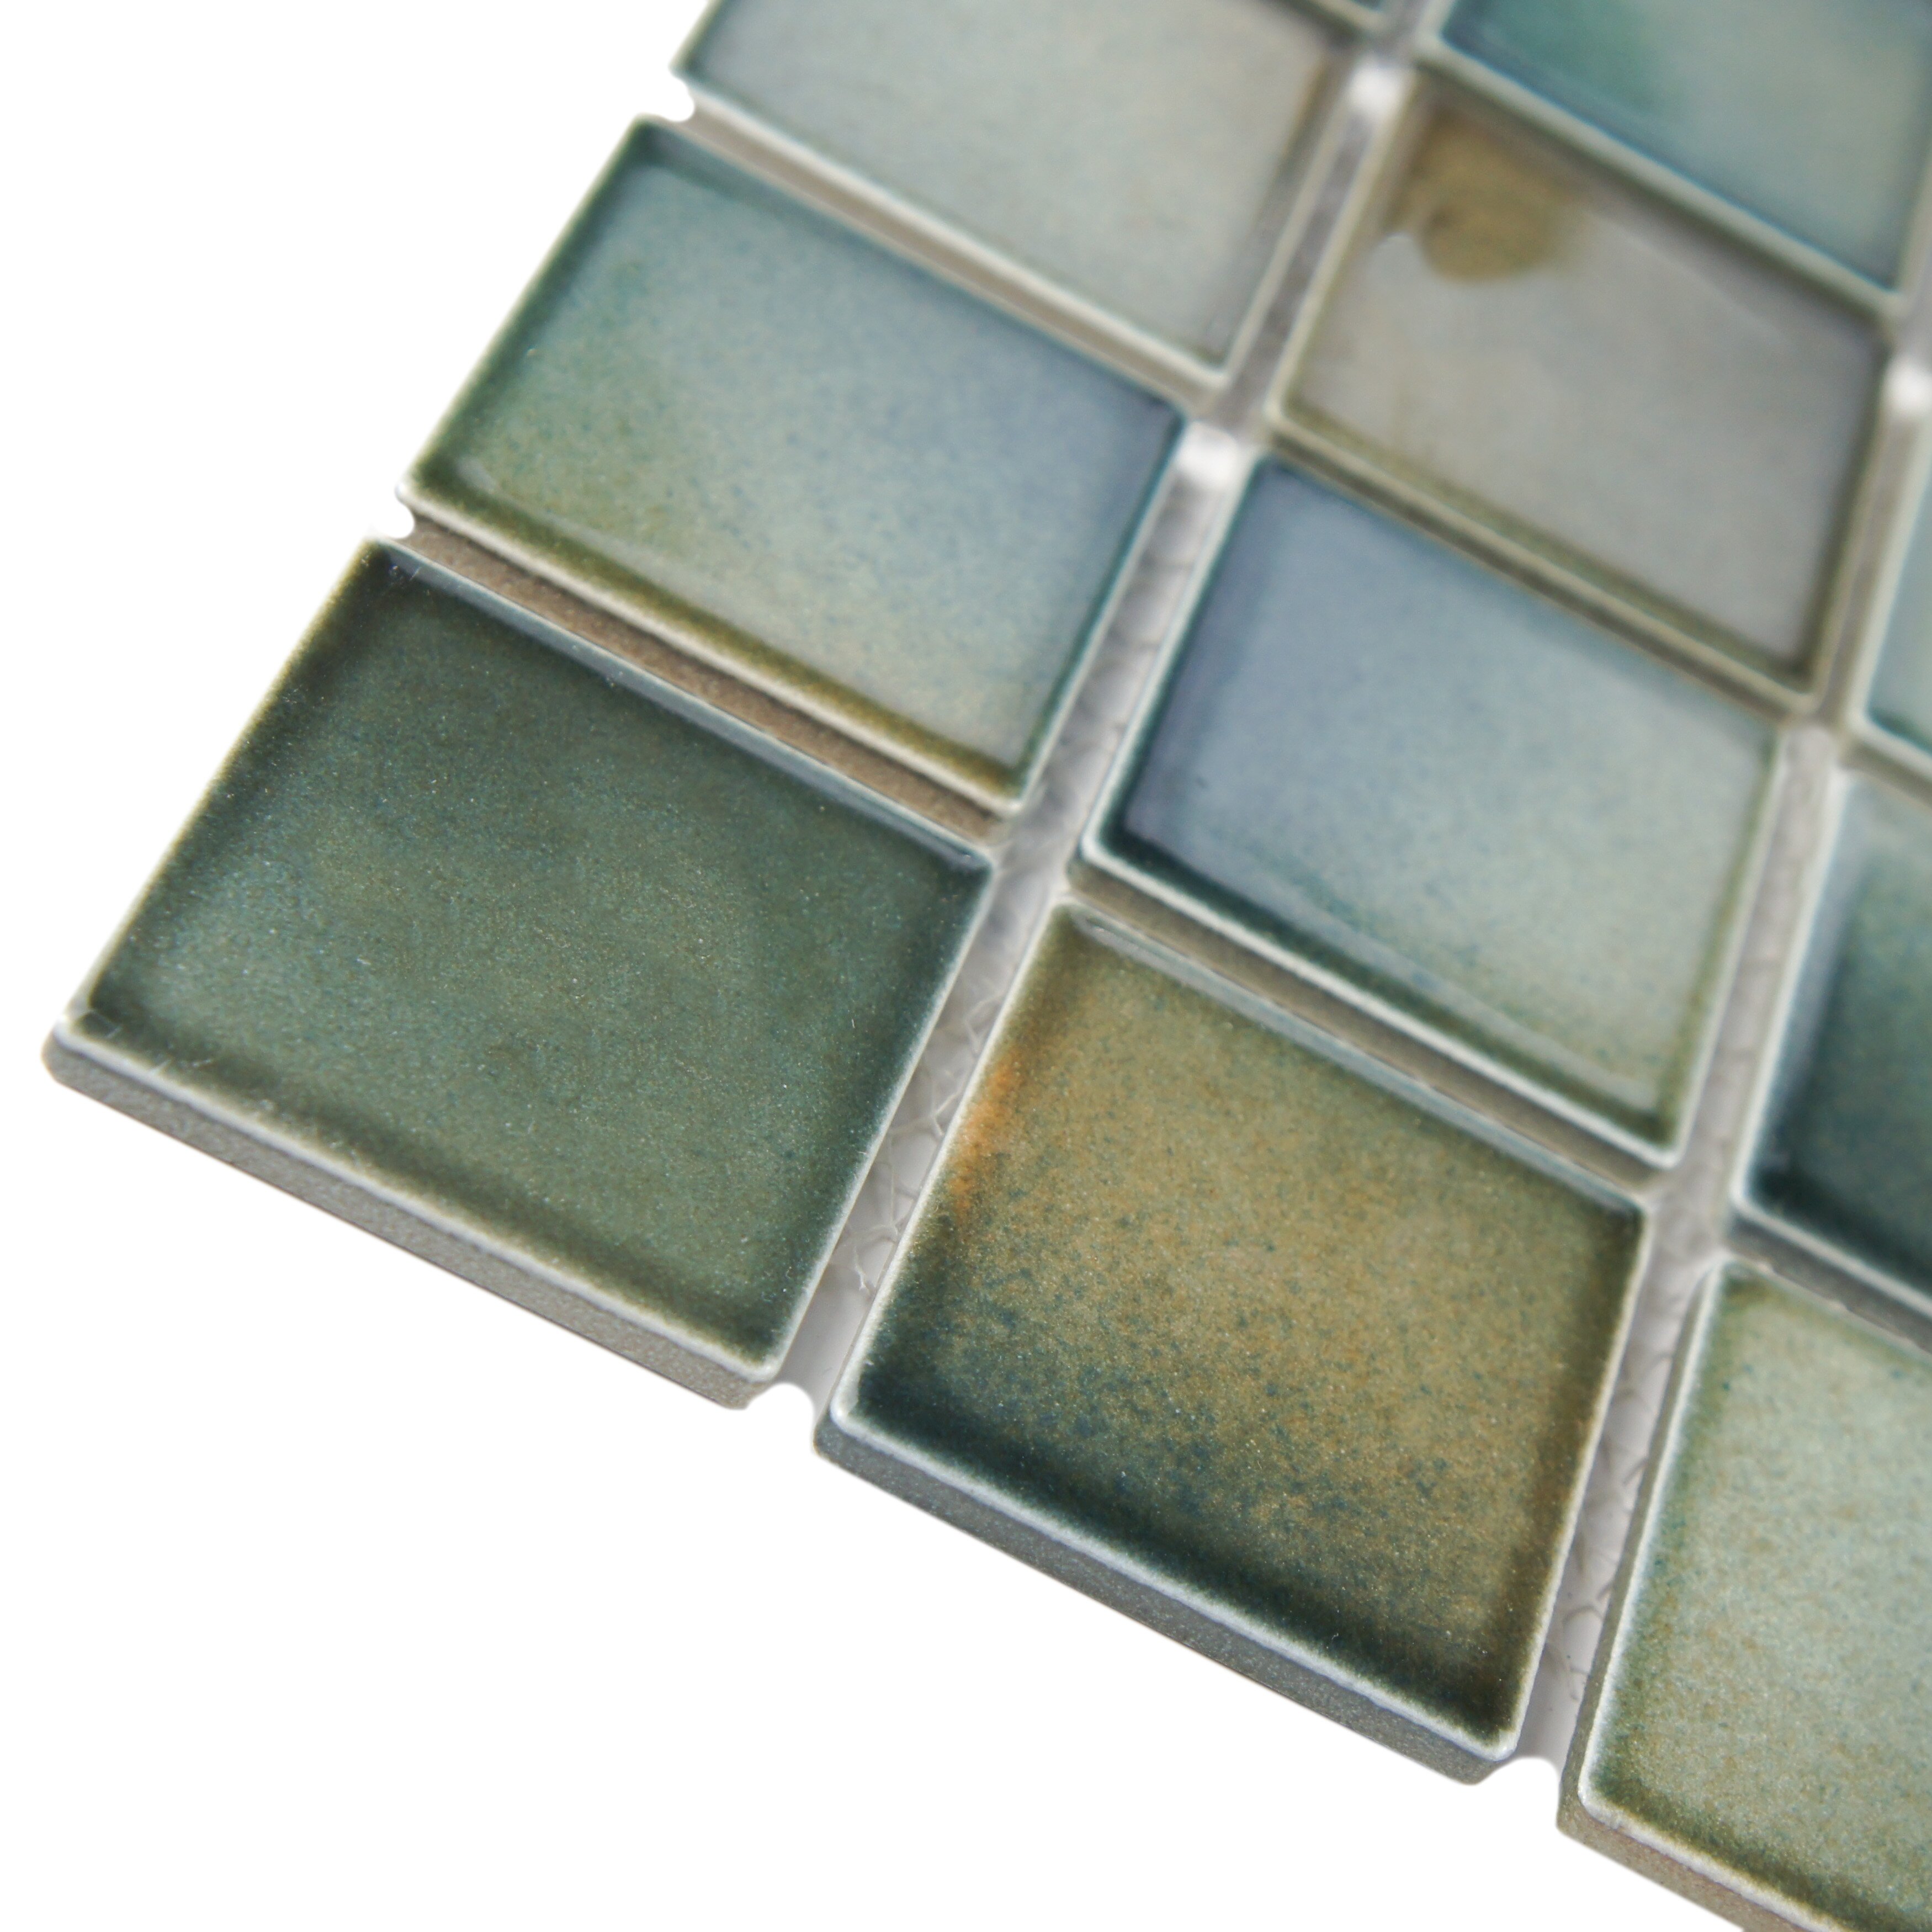 Elitetile Arthur 2 X 2 Porcelain Mosaic Tile In Browngreen And Reviews